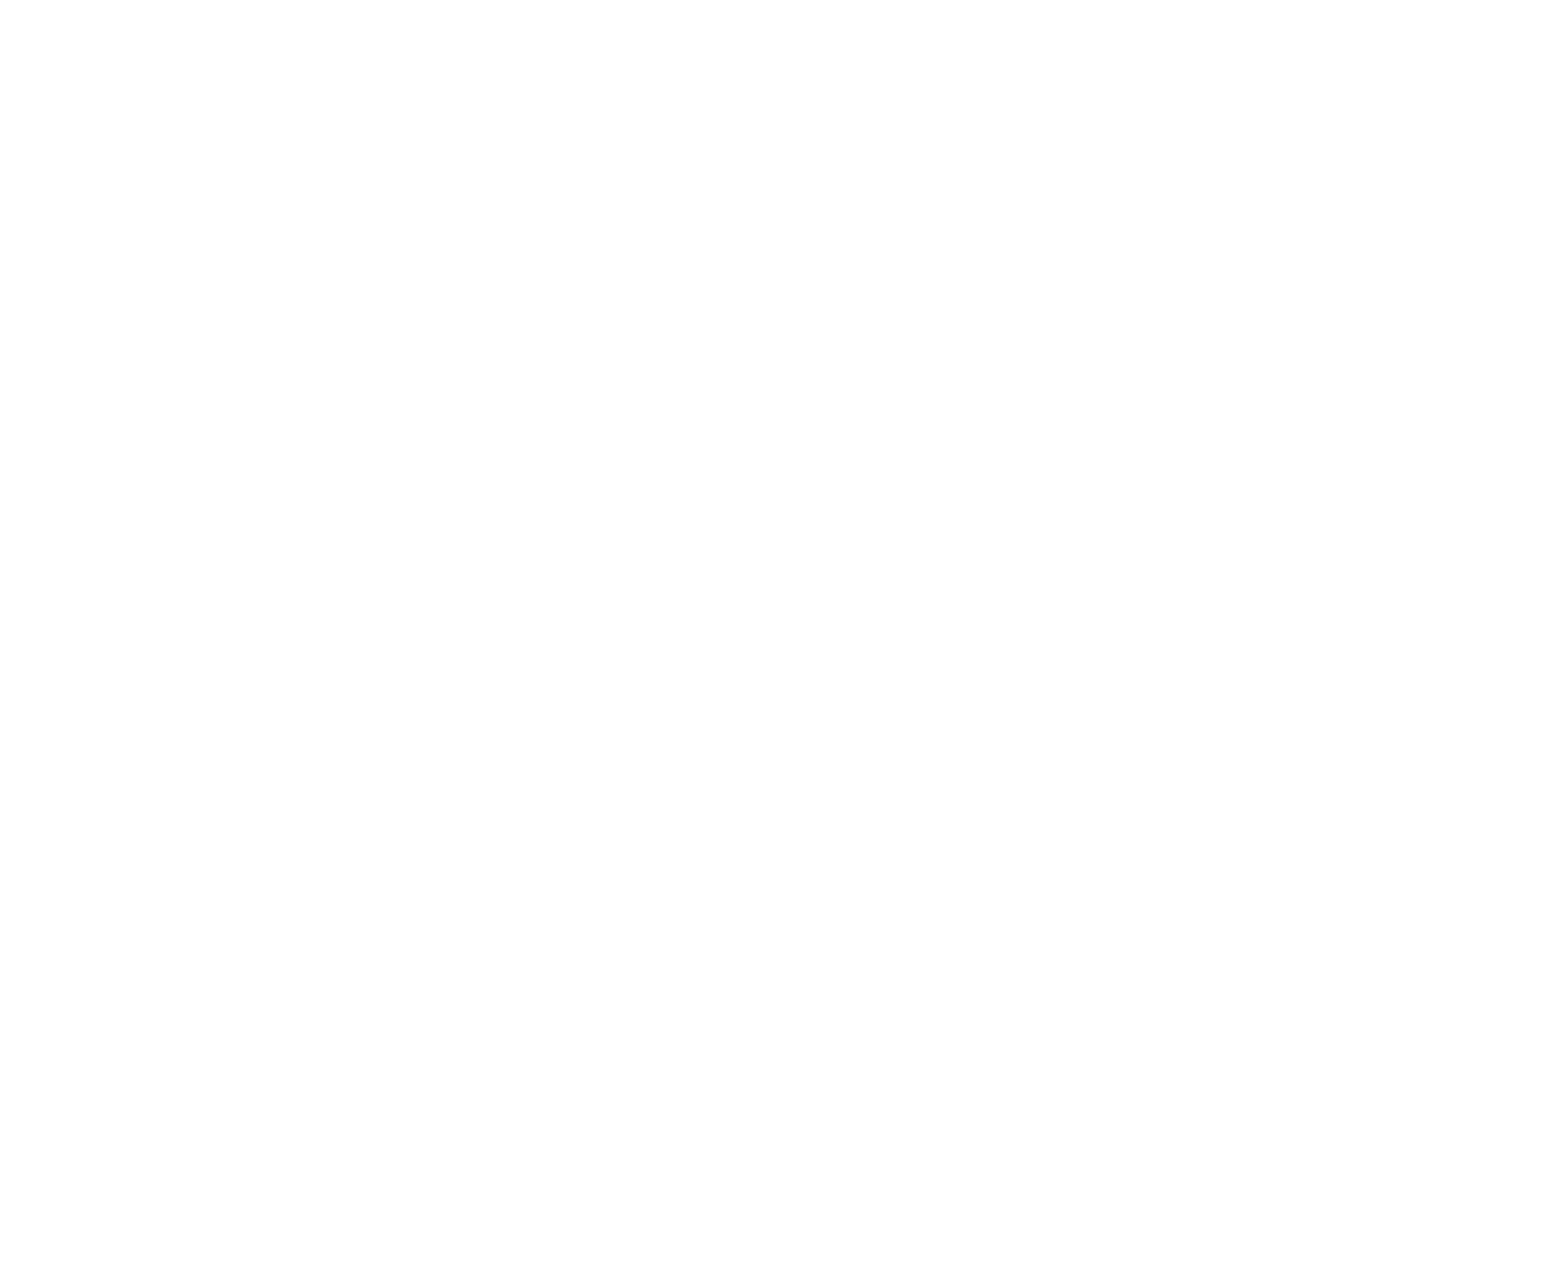 FB Financial logo for dark backgrounds (transparent PNG)